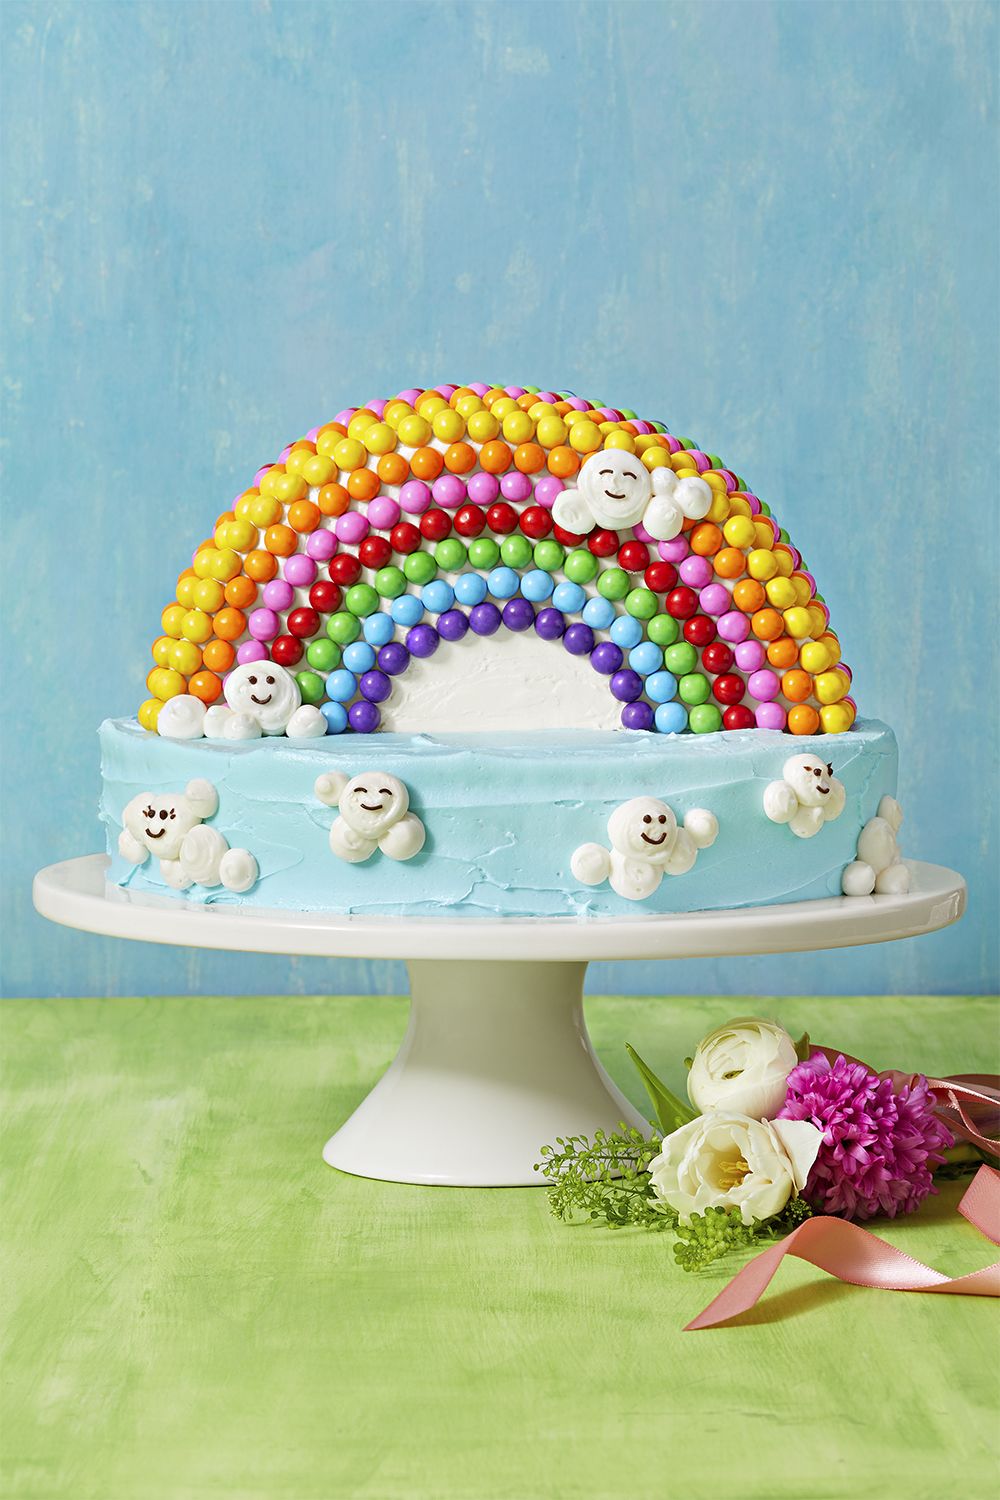 Best Rainbow Cloud Cake Recipe - How To Make Rainbow Cloud Cake